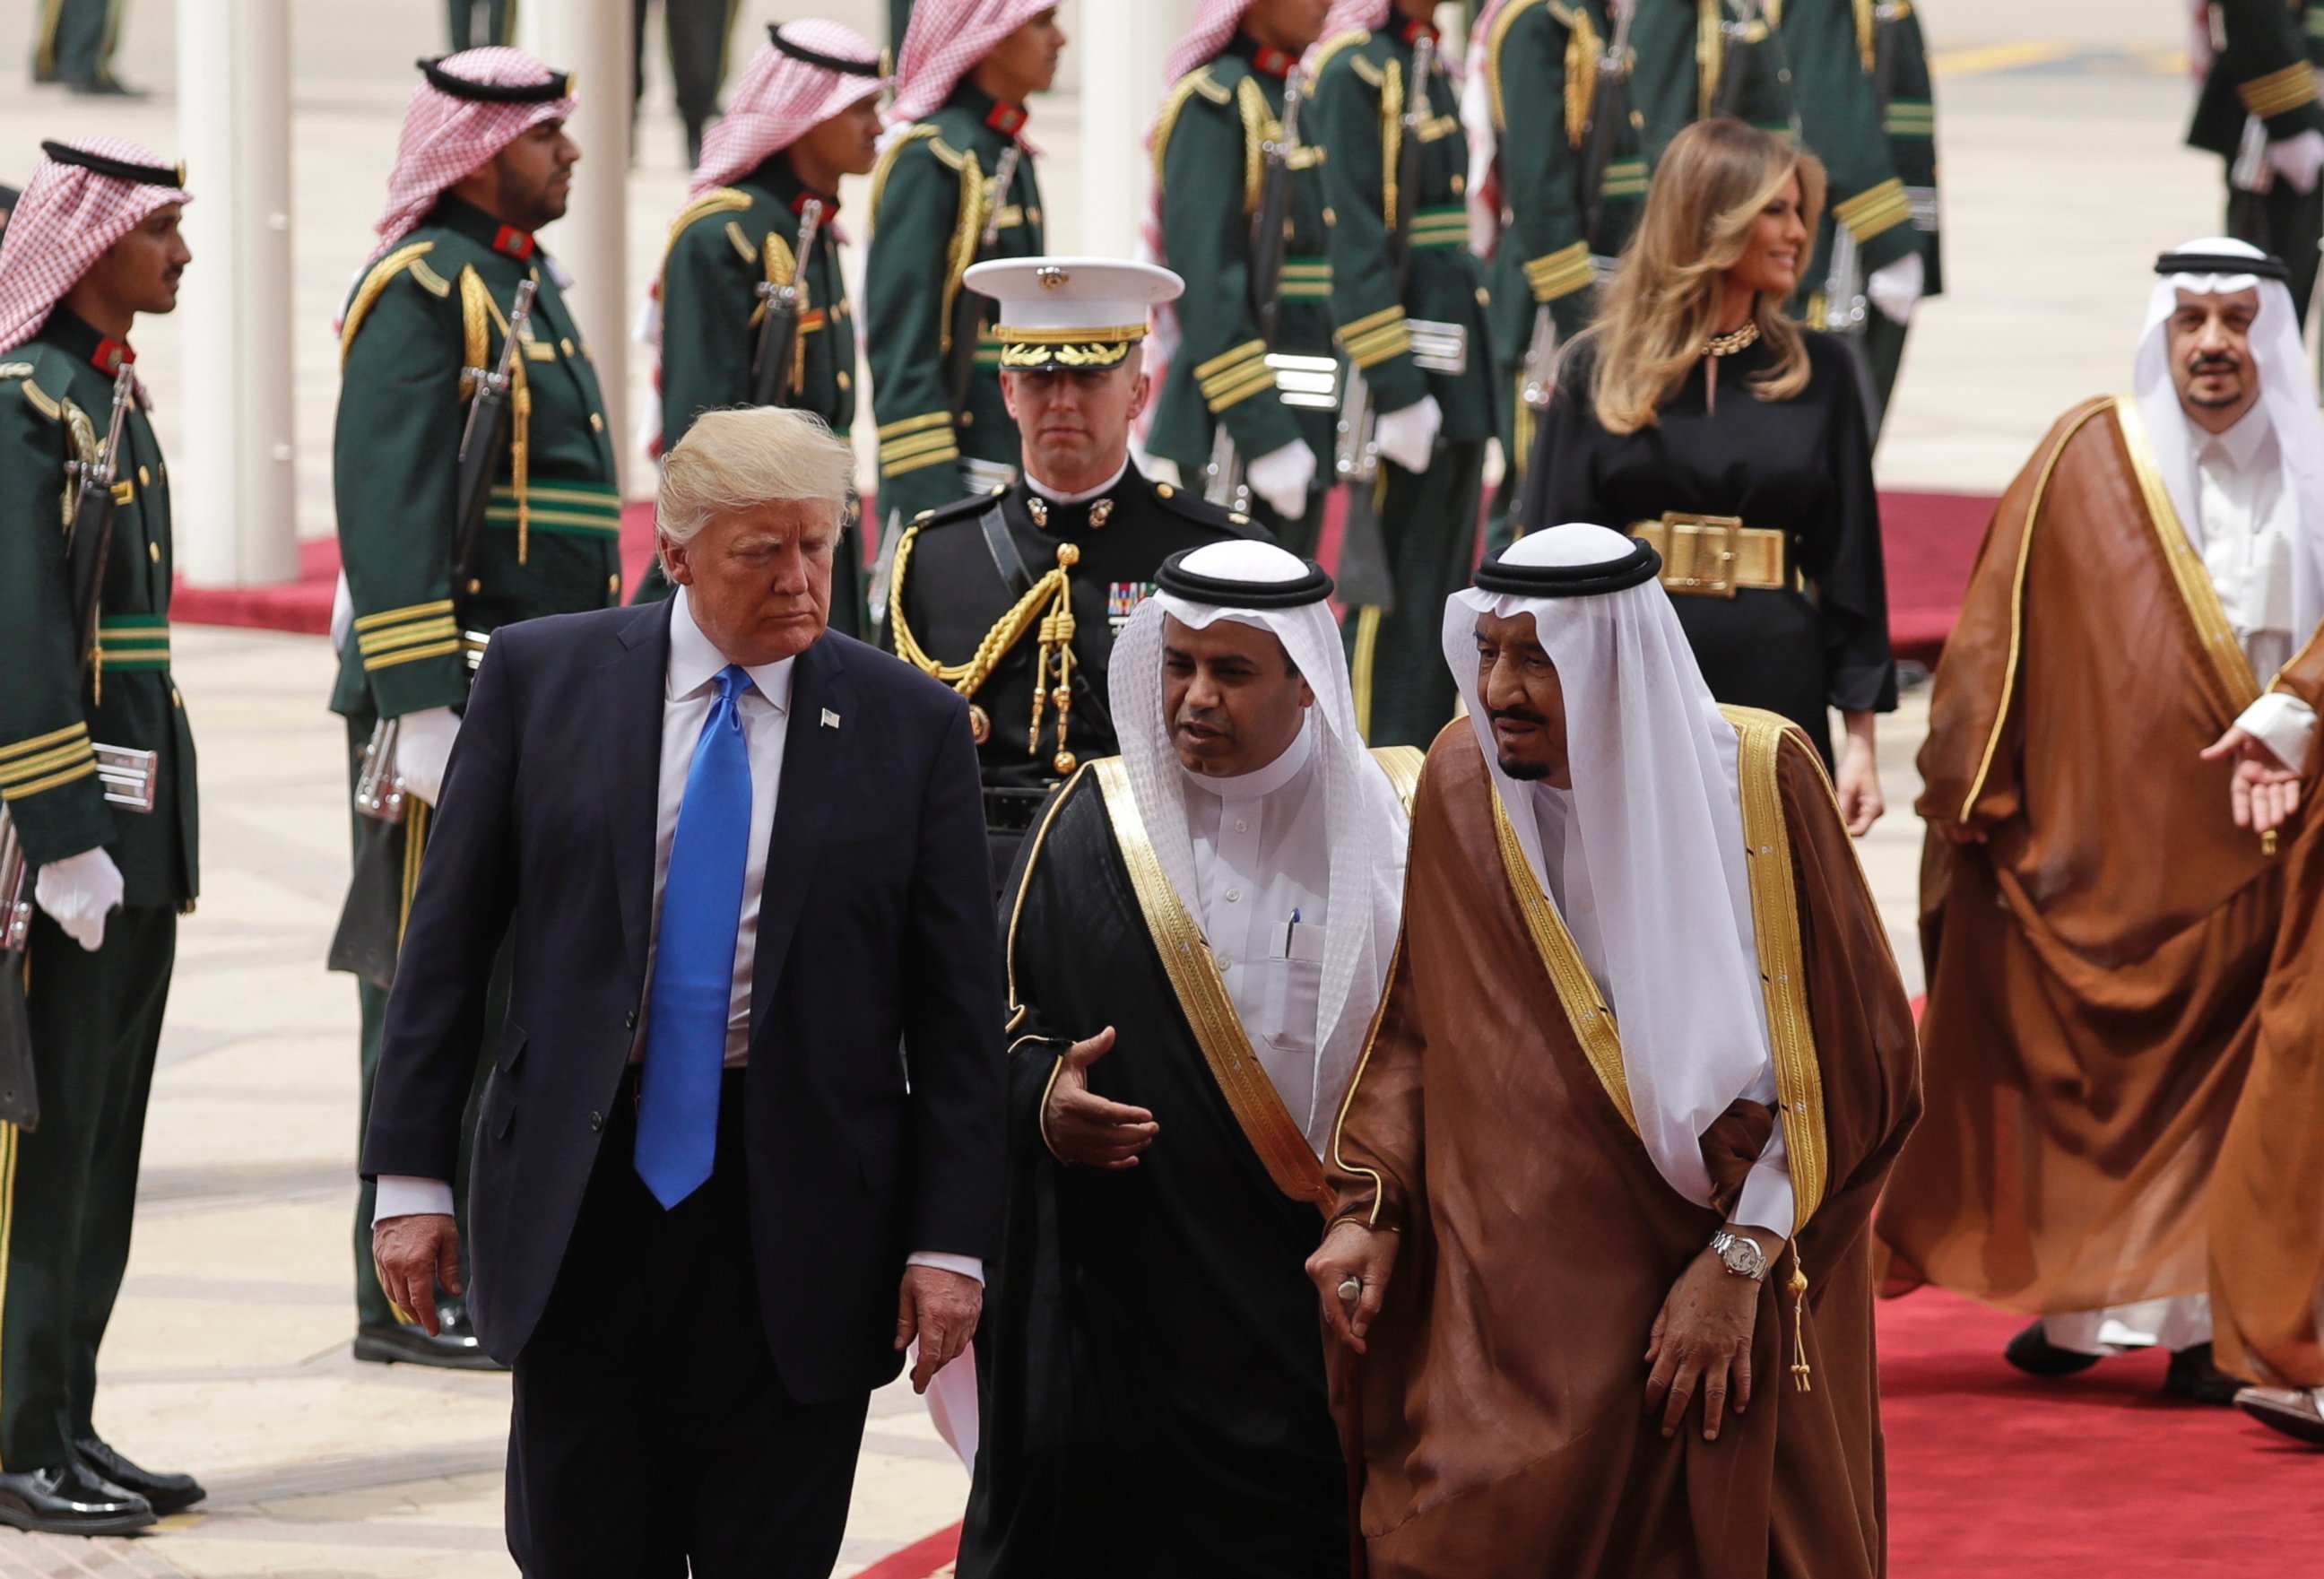 PHOTO: President Donald Trump and first lady Melania Trump, rear, arrive at the Royal Terminal of King Khalid International Airport, Saturday, May 20, 2017, in Riyadh.